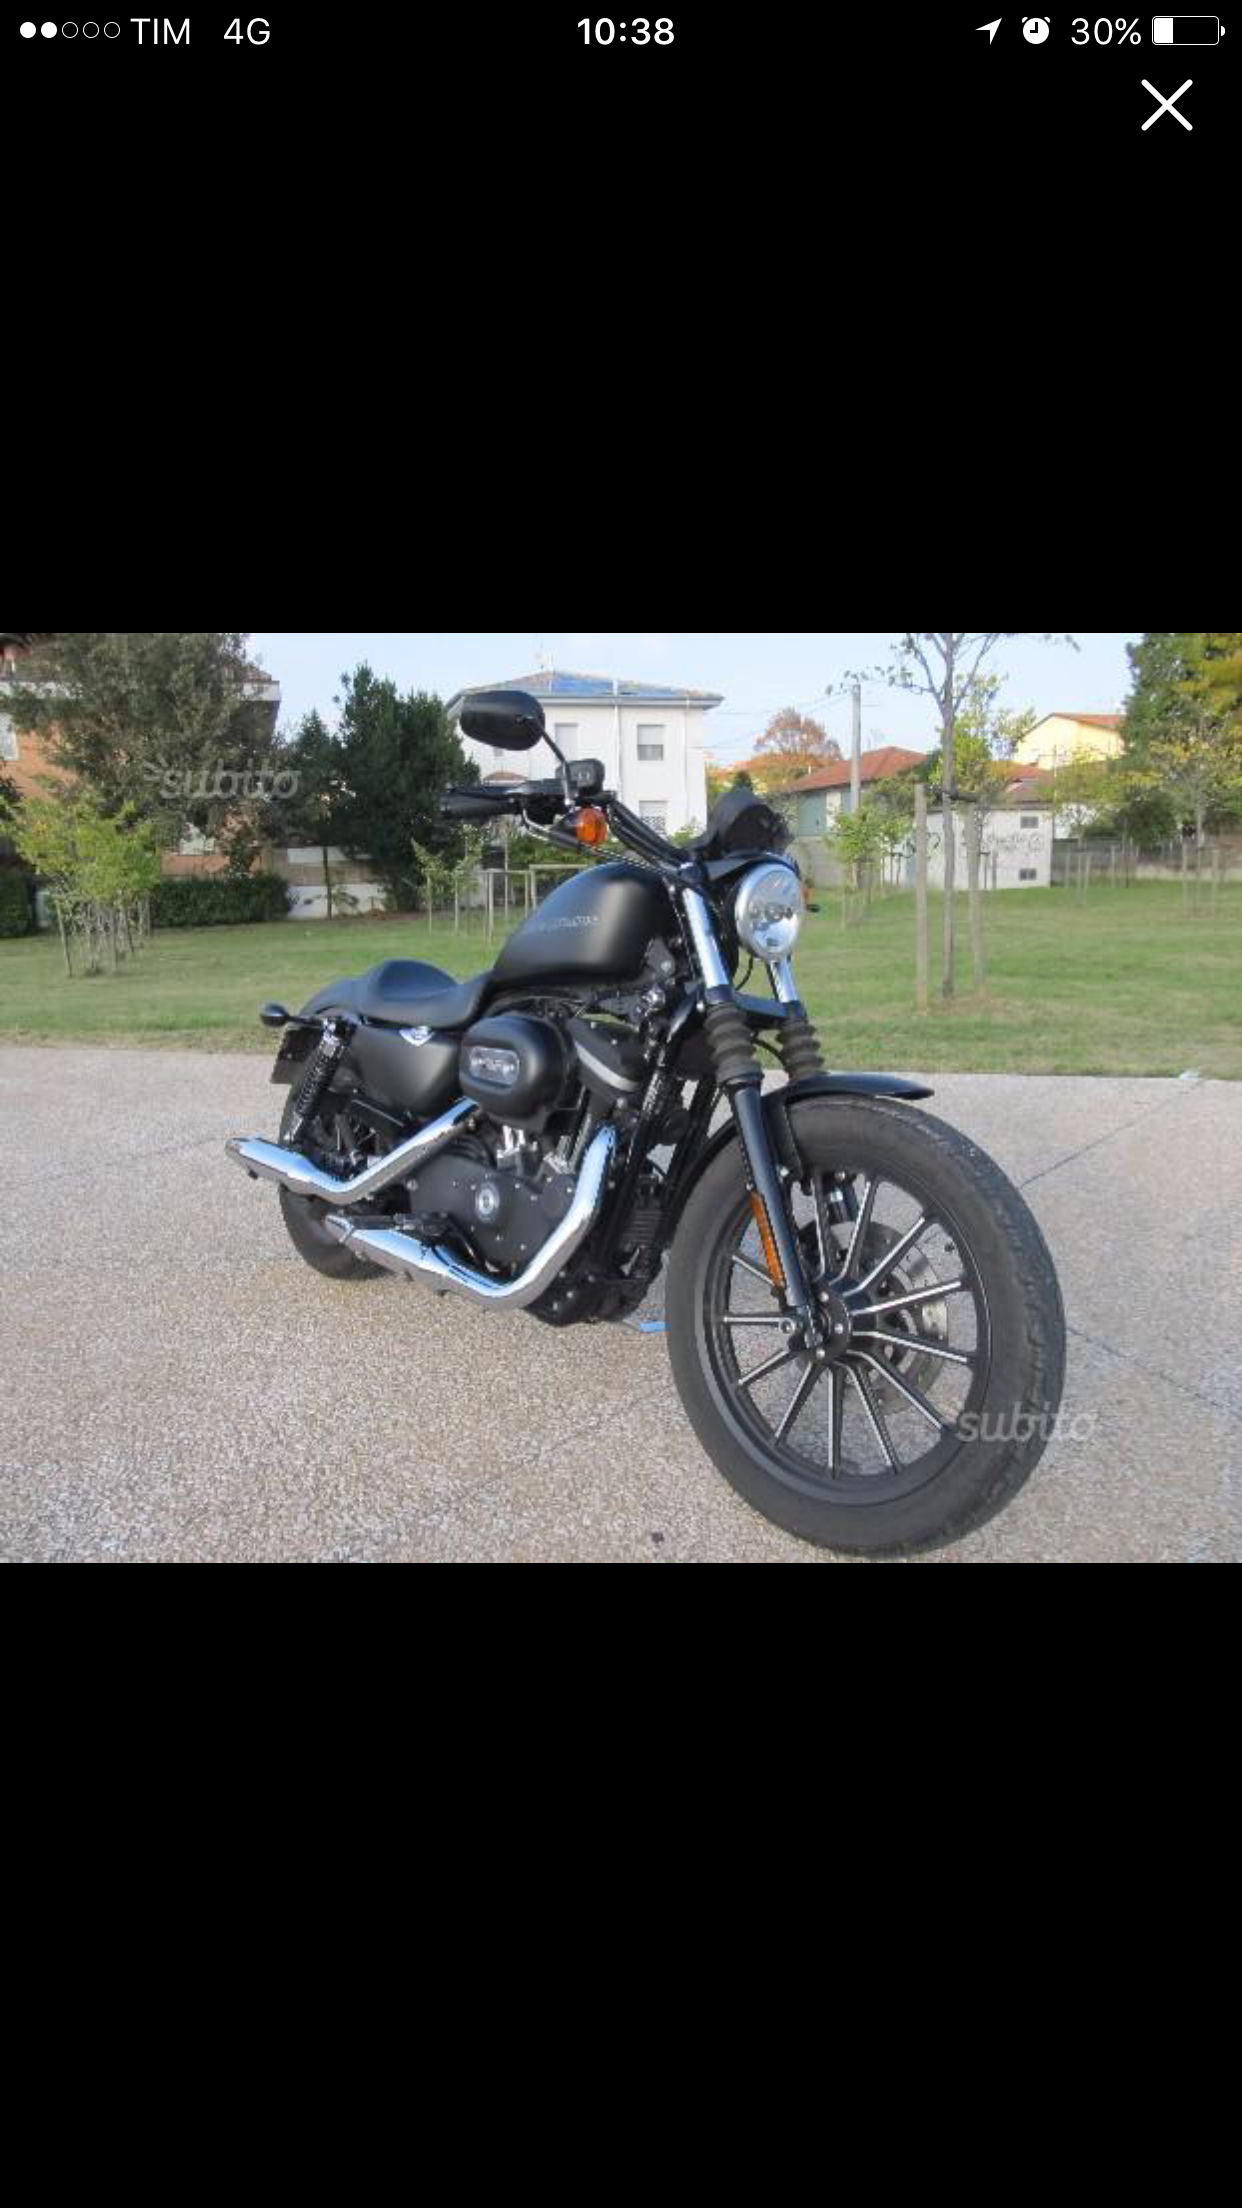 Harley Davidson 883 iron